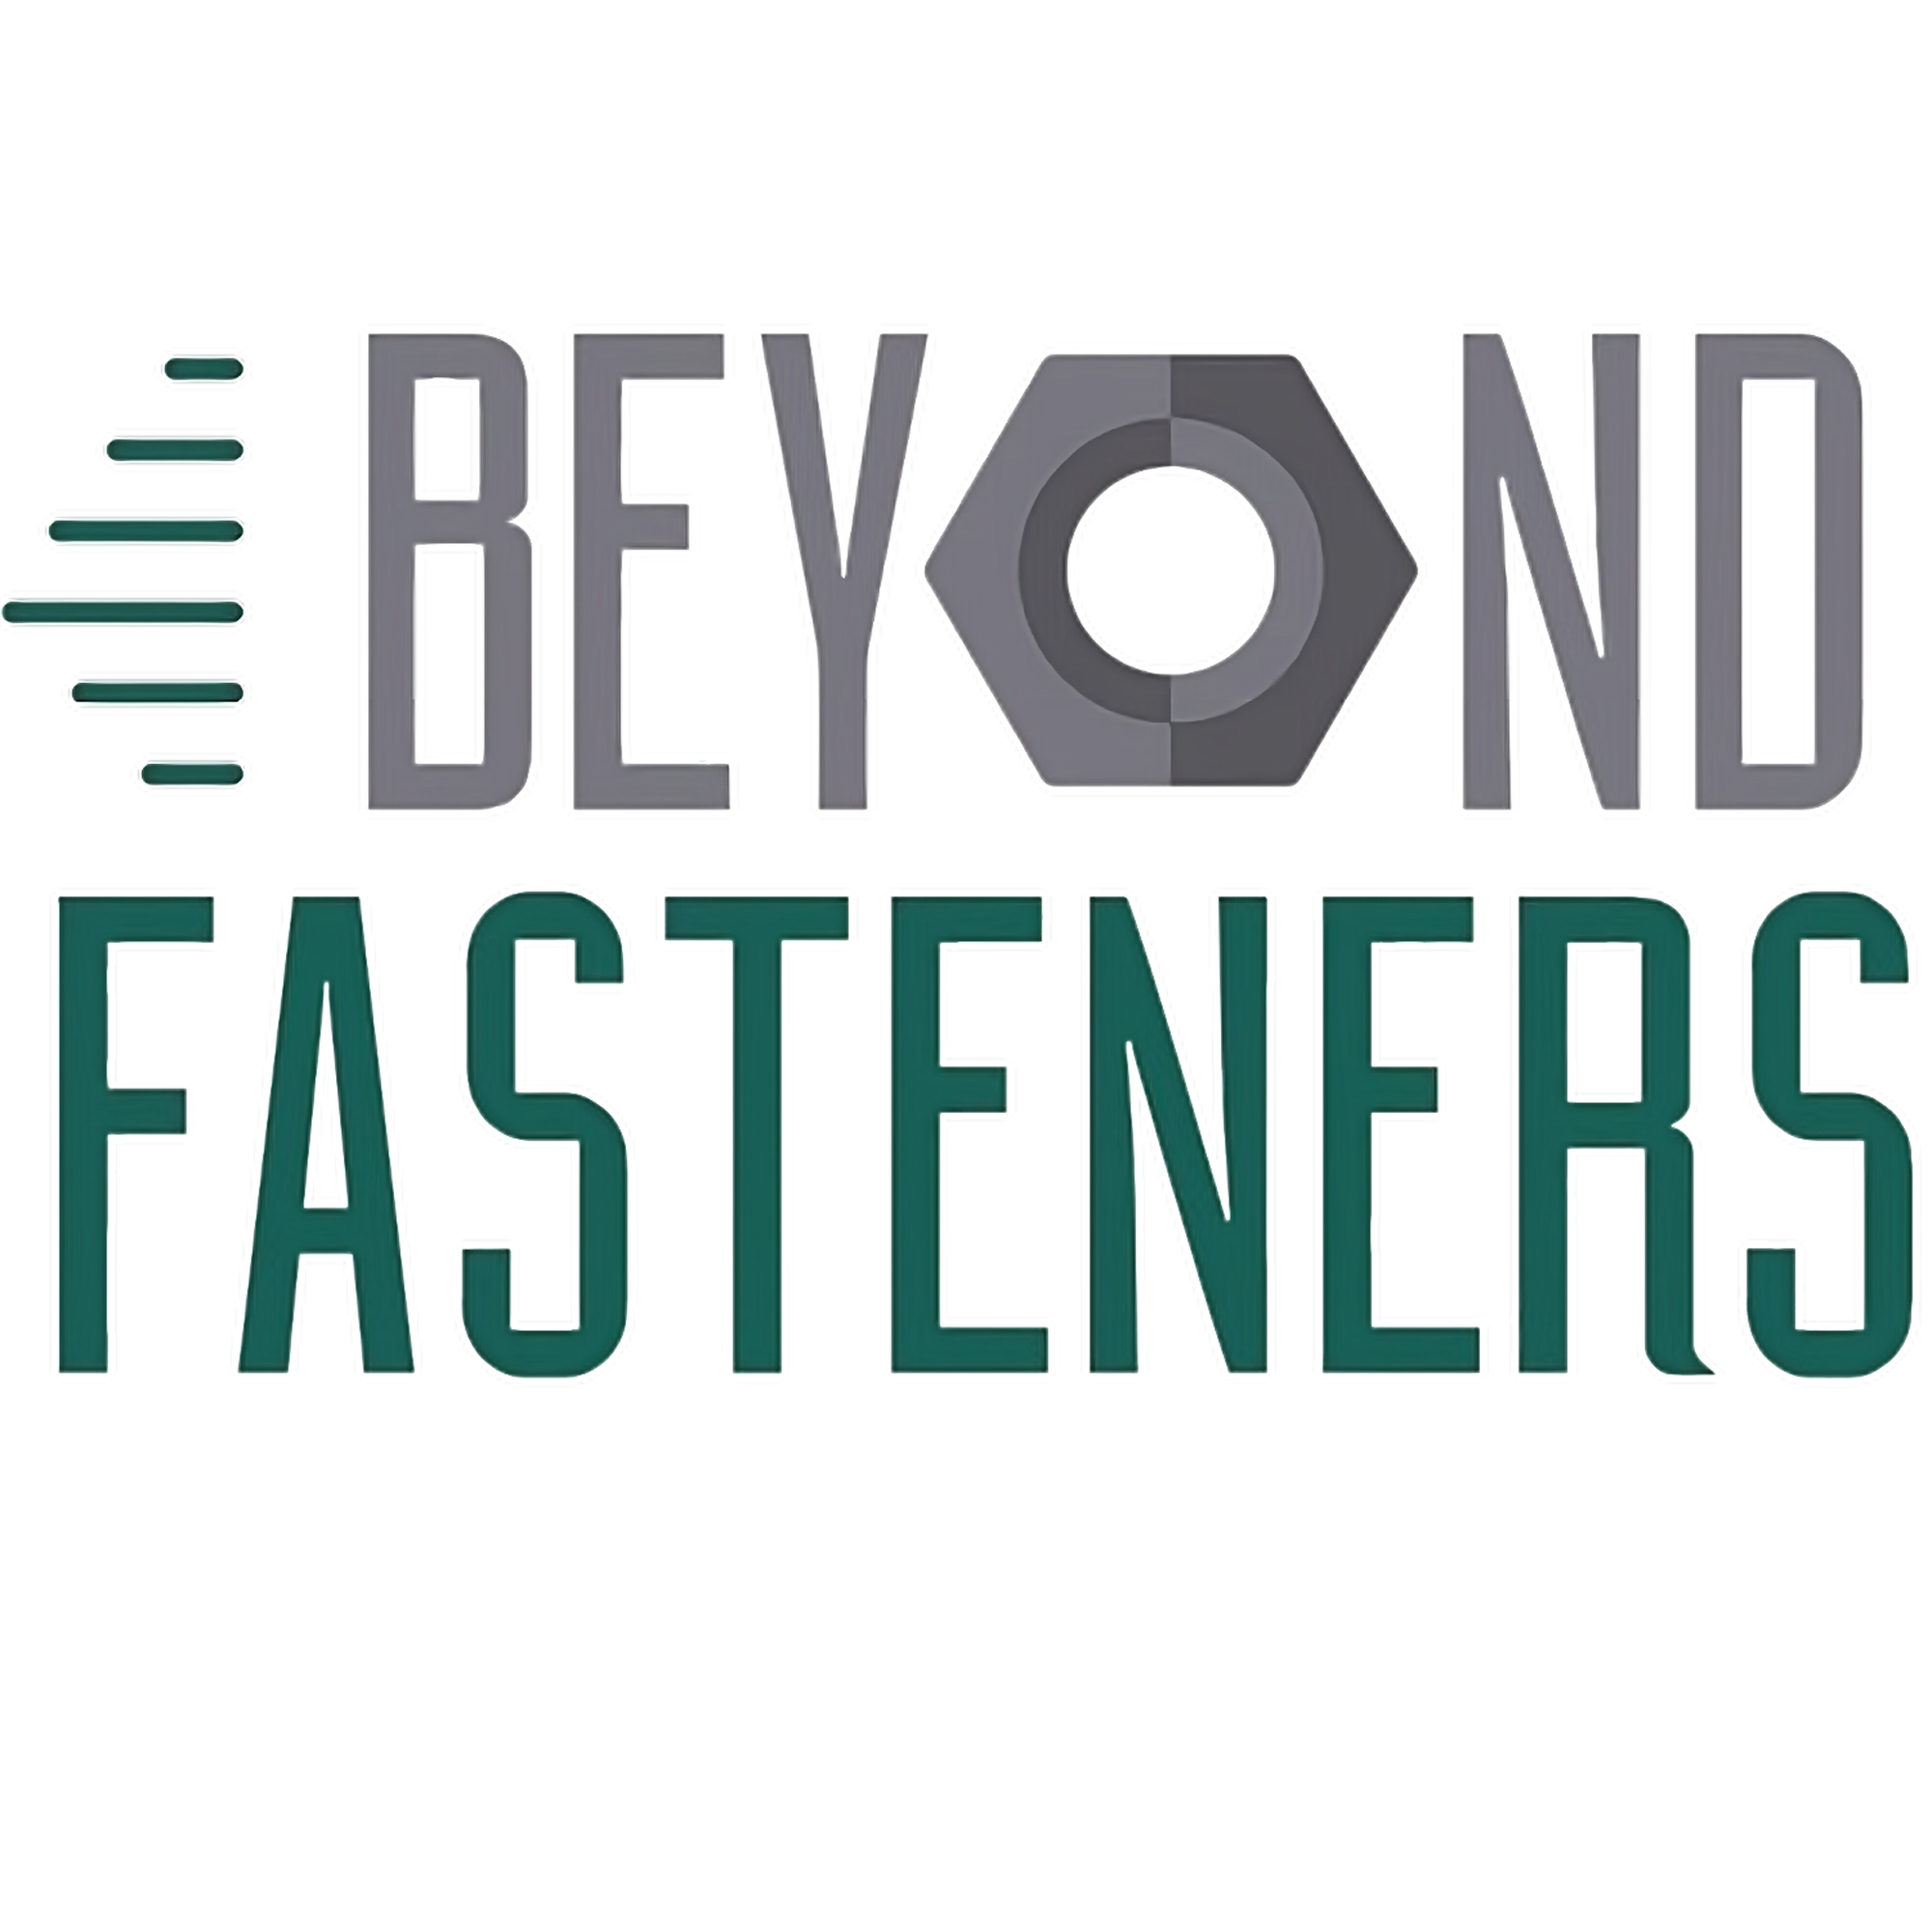 Beyond Fasteners